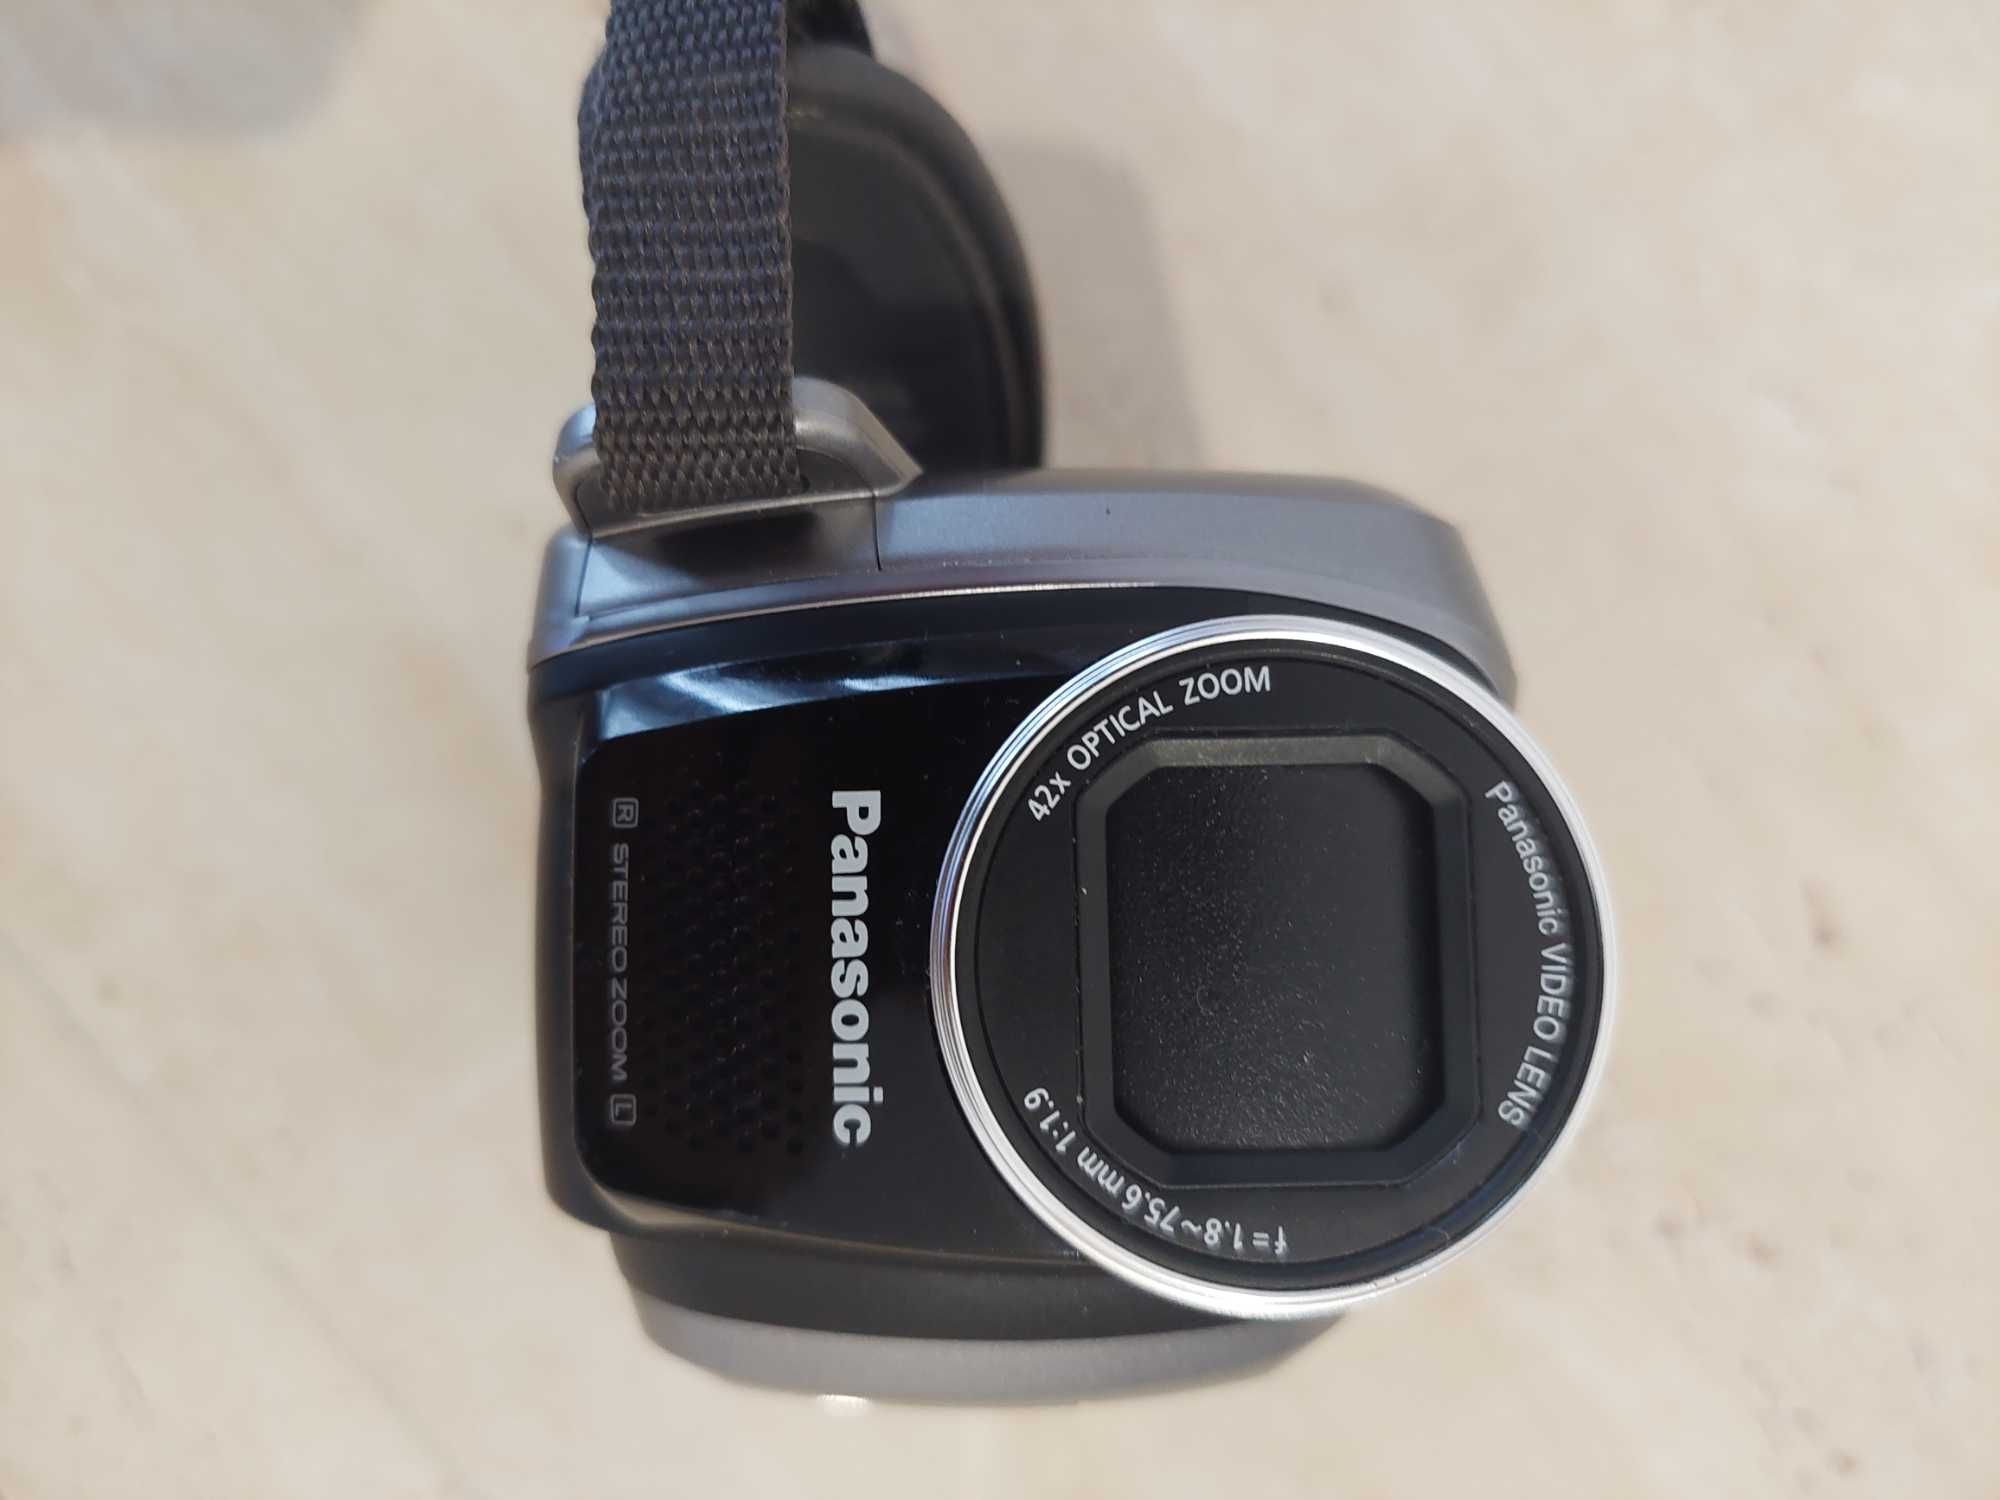 Vand/ofer la schimb-camera Panasonic SDR-H40,HDD40GB,-stare perfecta.